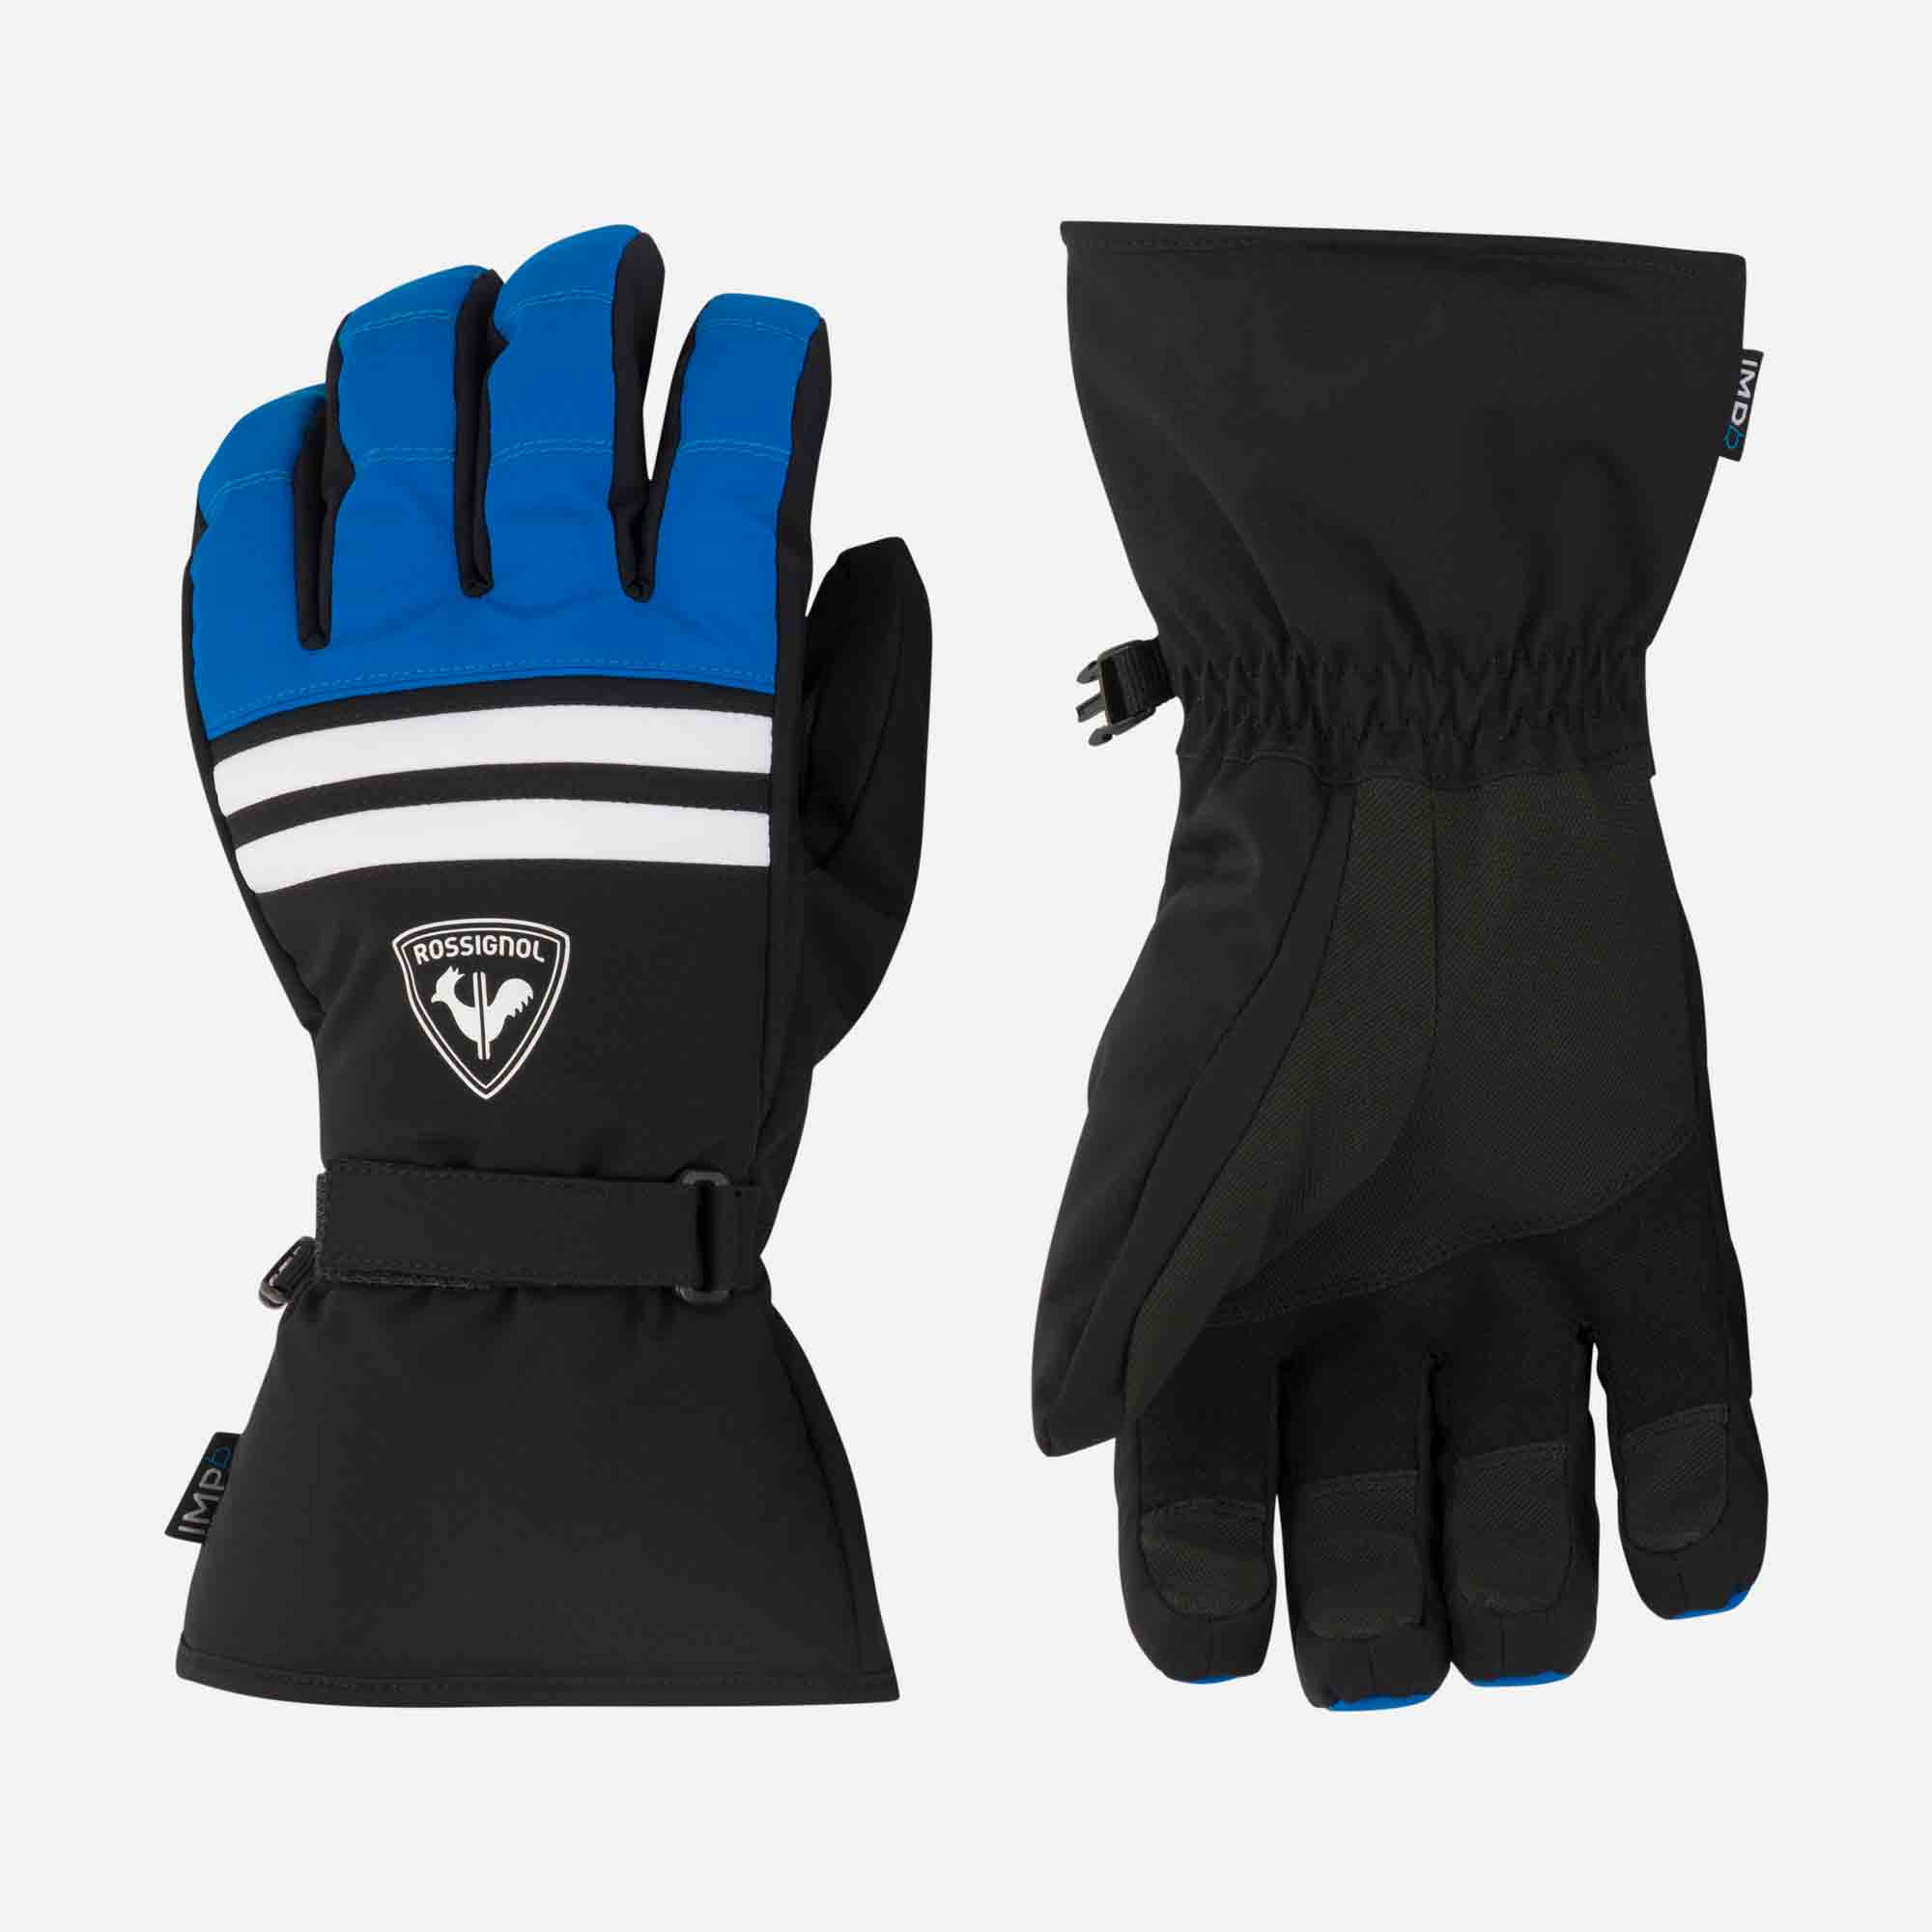 Men's action waterproof ski gloves